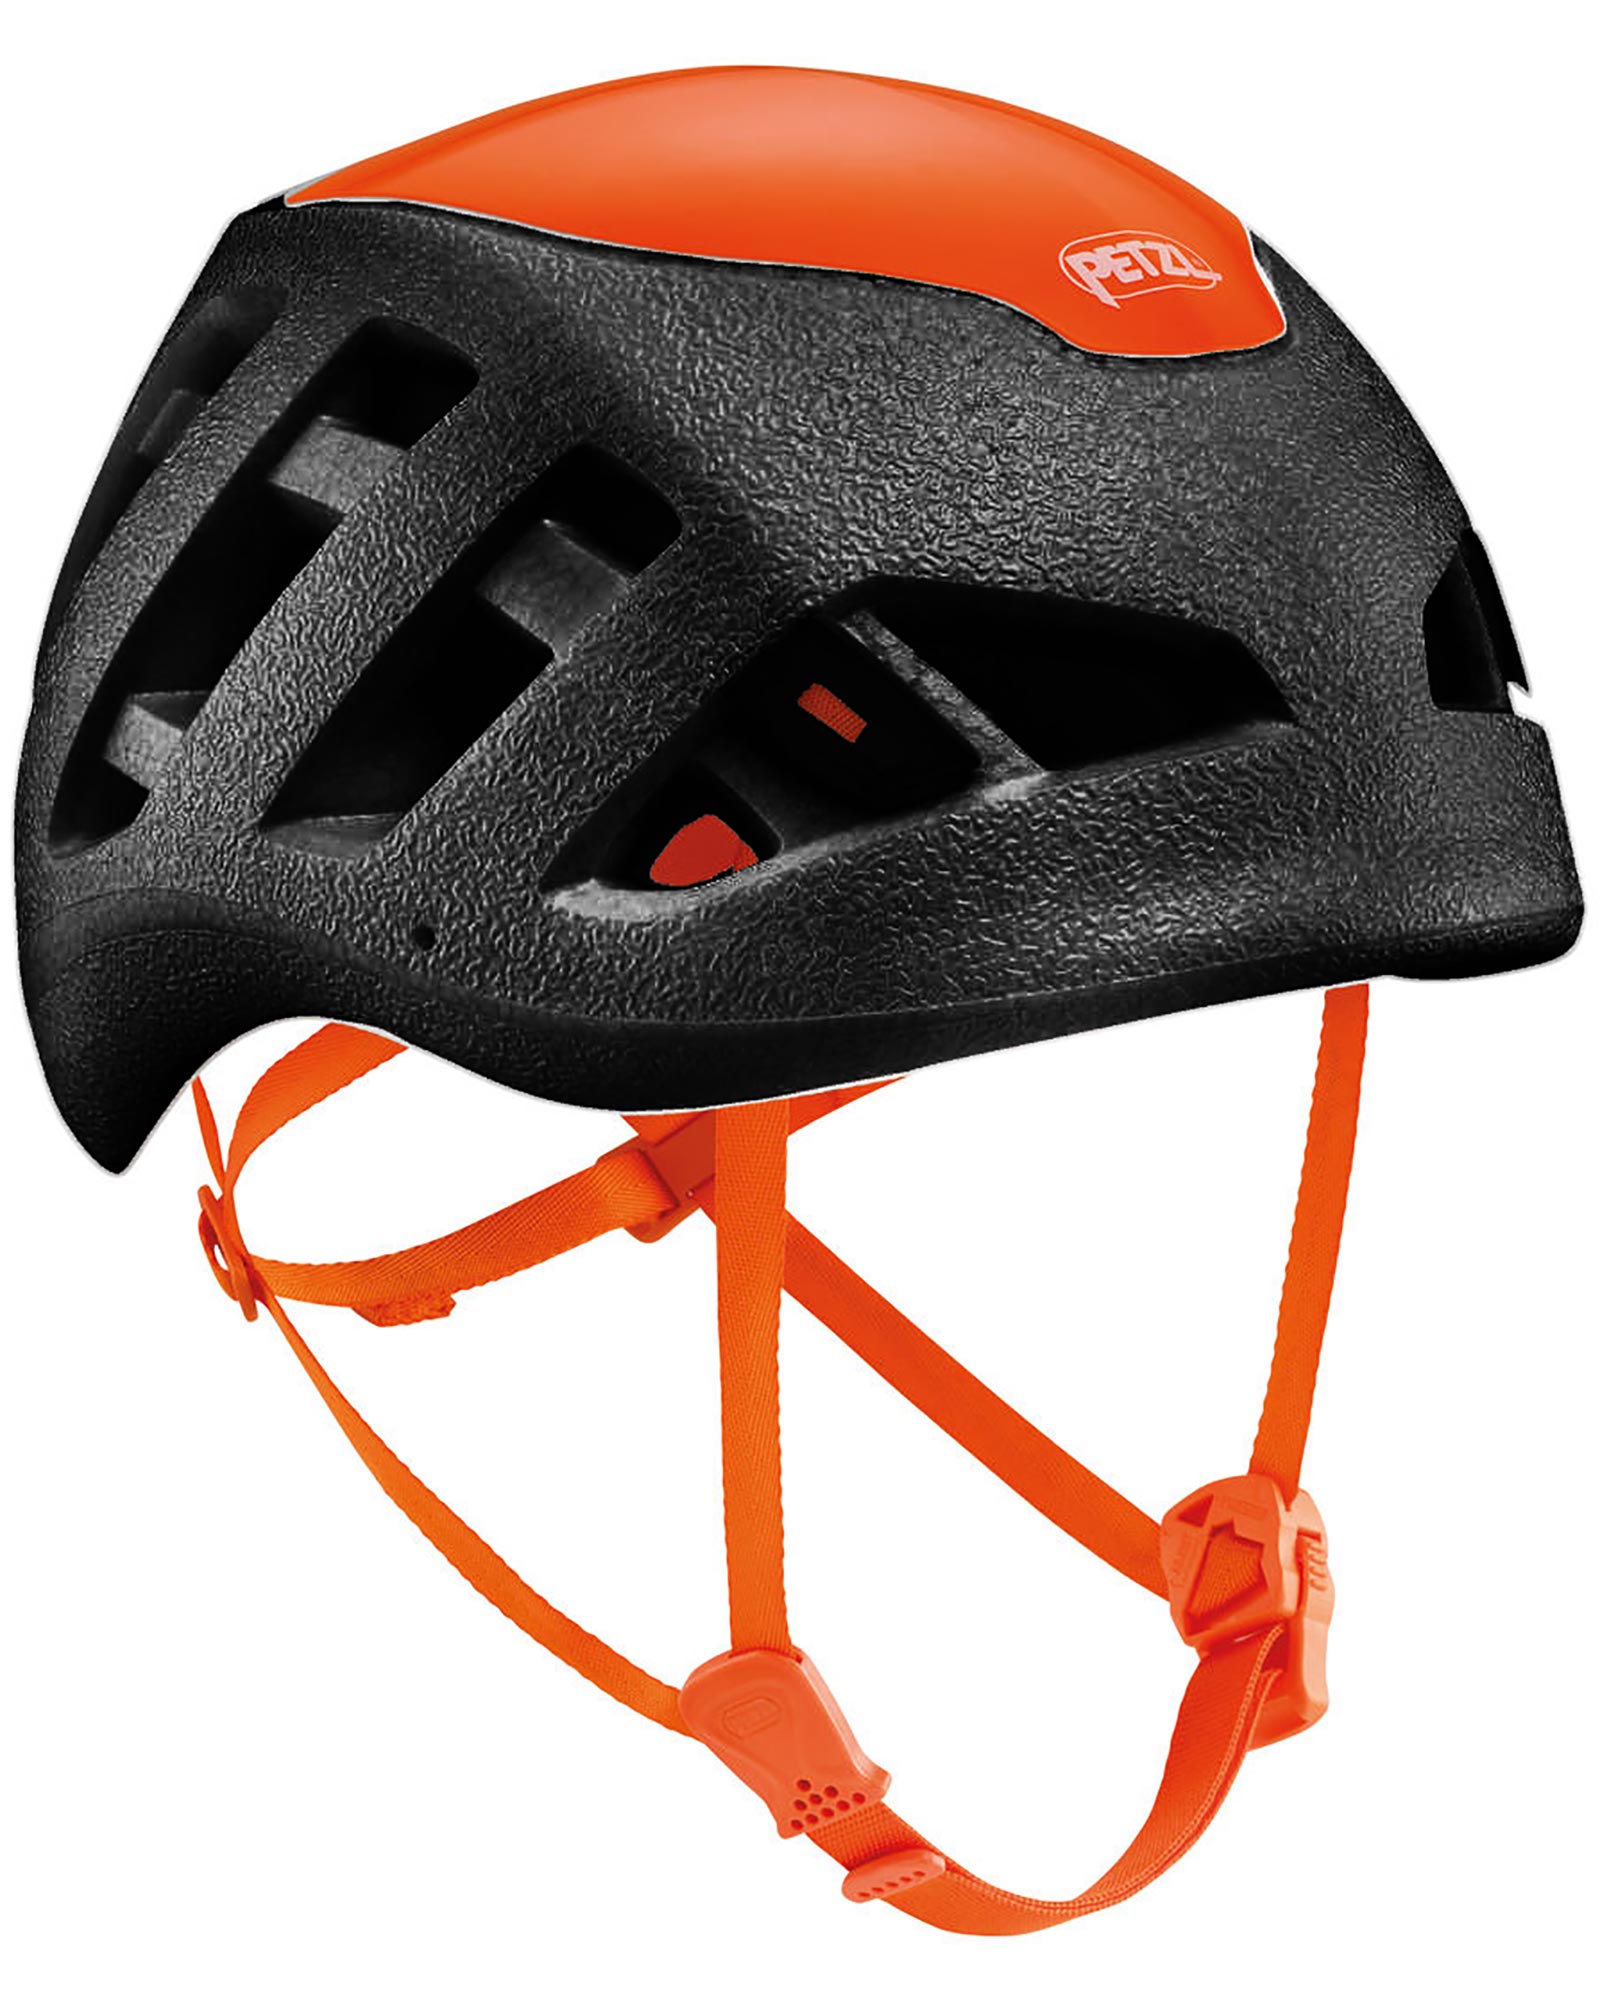 Petzl Sirocco Helmet - Black/Orange S/M